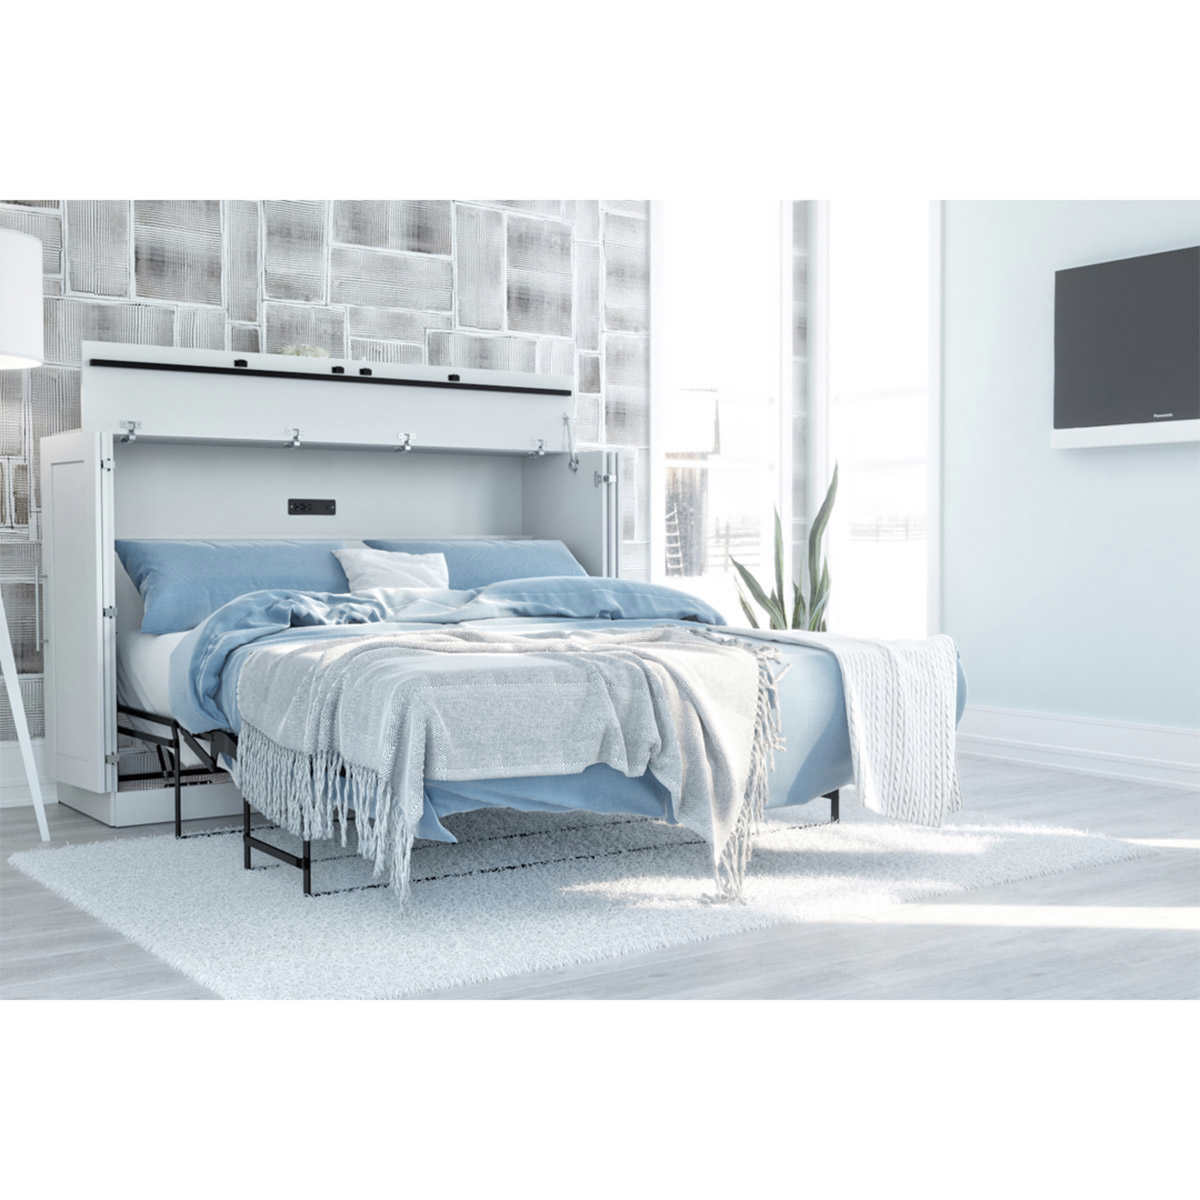 Bestar Illusion White Queen Cabinet Bed With Mattress